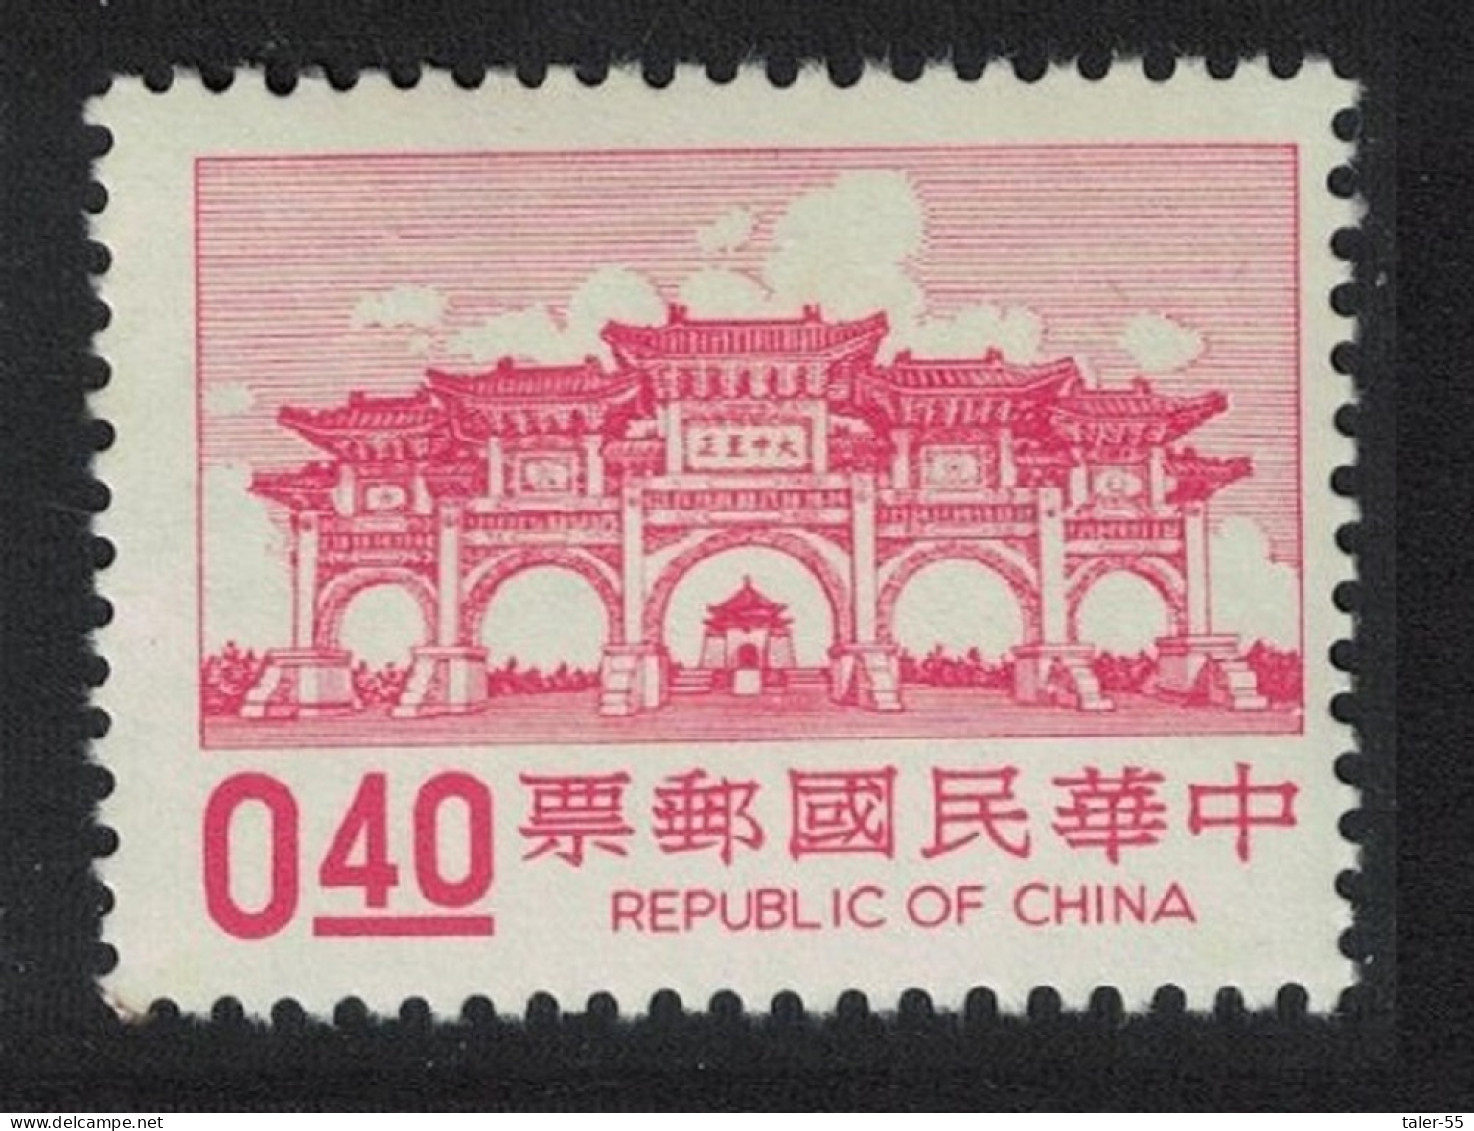 Taiwan Main Gate Chiang Kai-shek Memorial Hall $0.40 1981 MNH SG#1355 - Unused Stamps